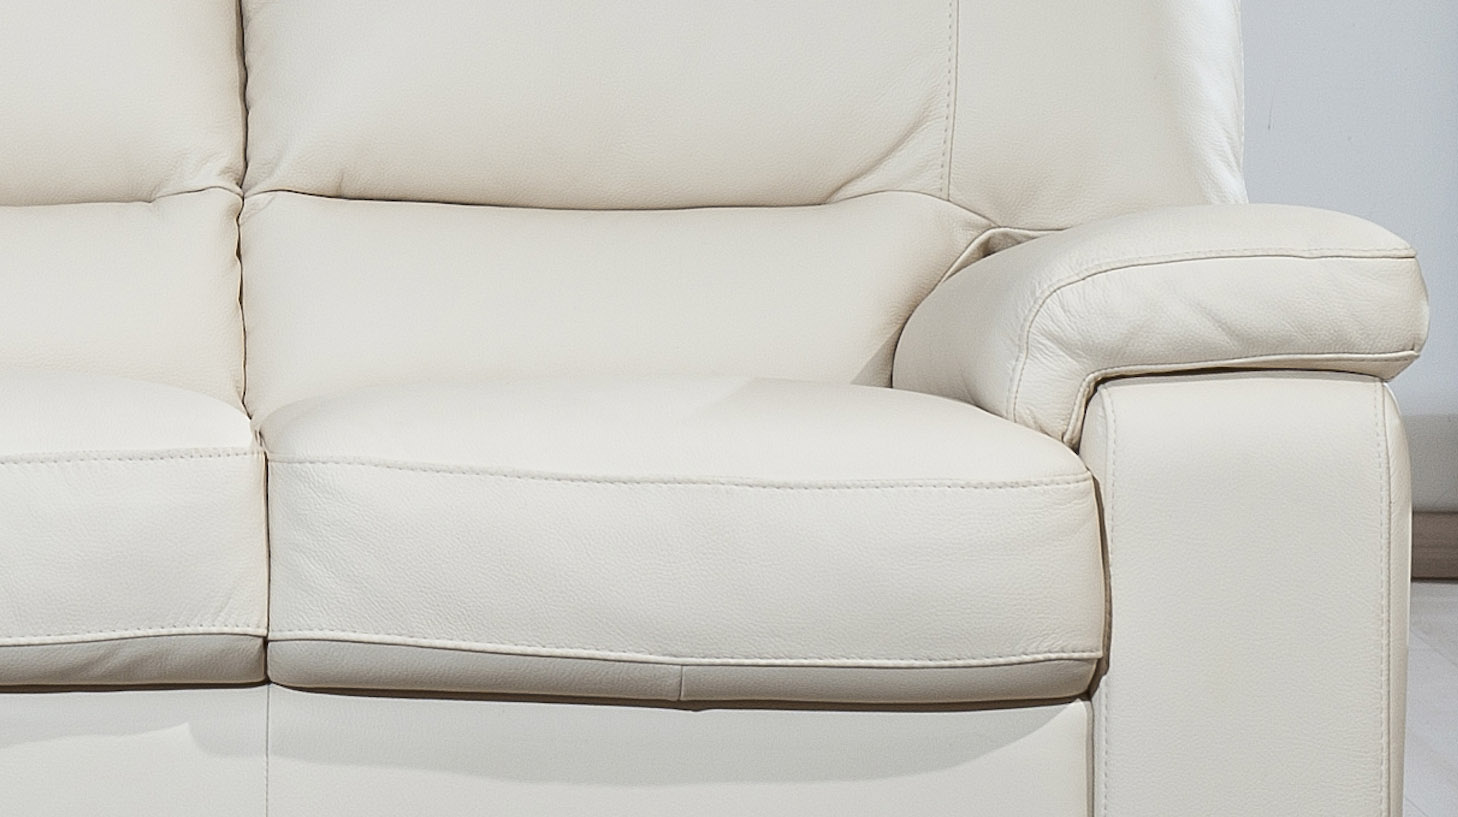 Luxor Italian Leather Sofa Set with Sliding Seats - Click Image to Close